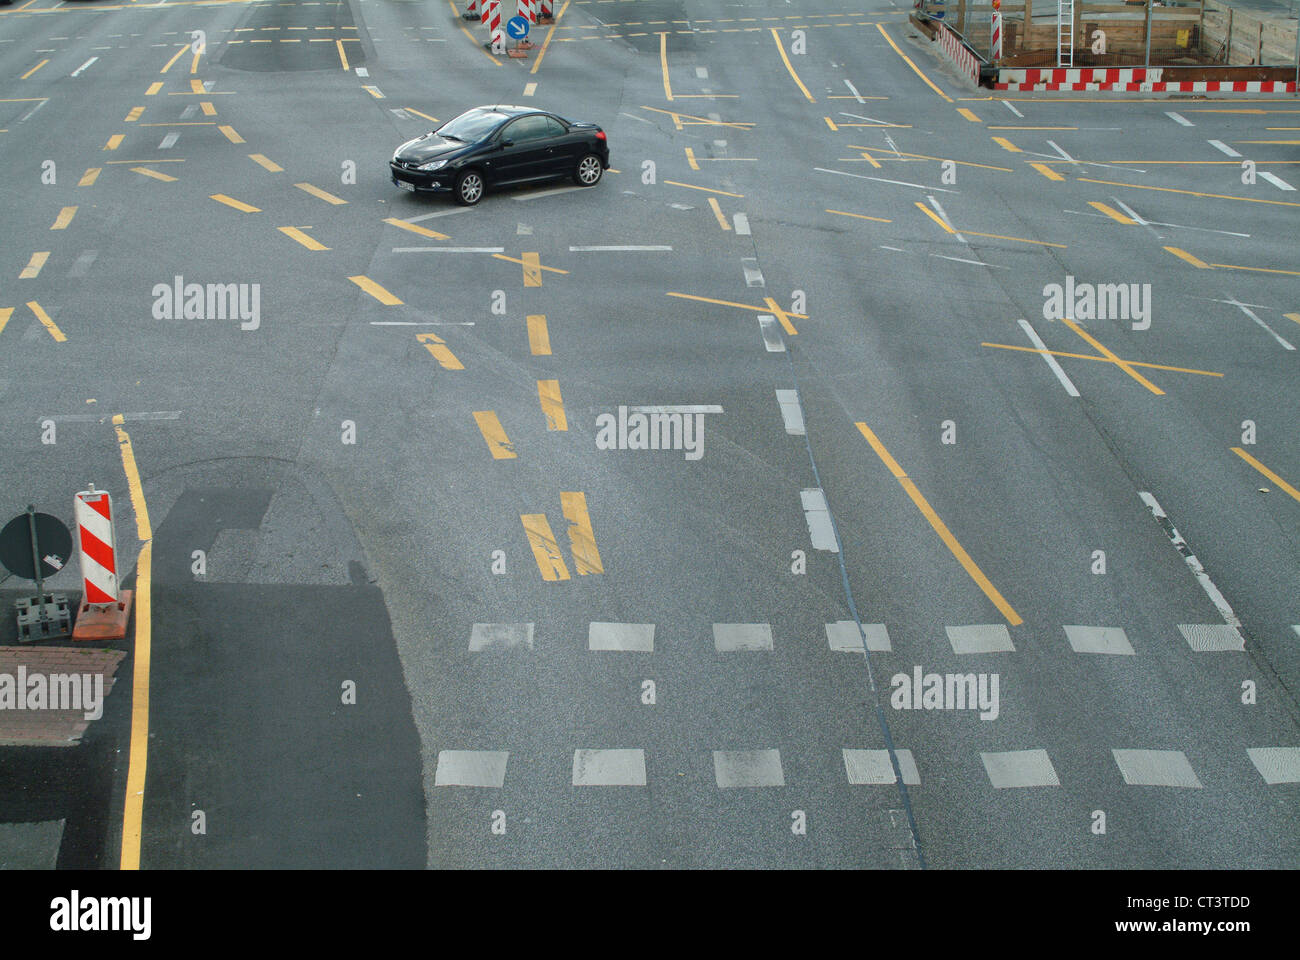 hamburg-confusing-road-markings-CT3TDD.jpg